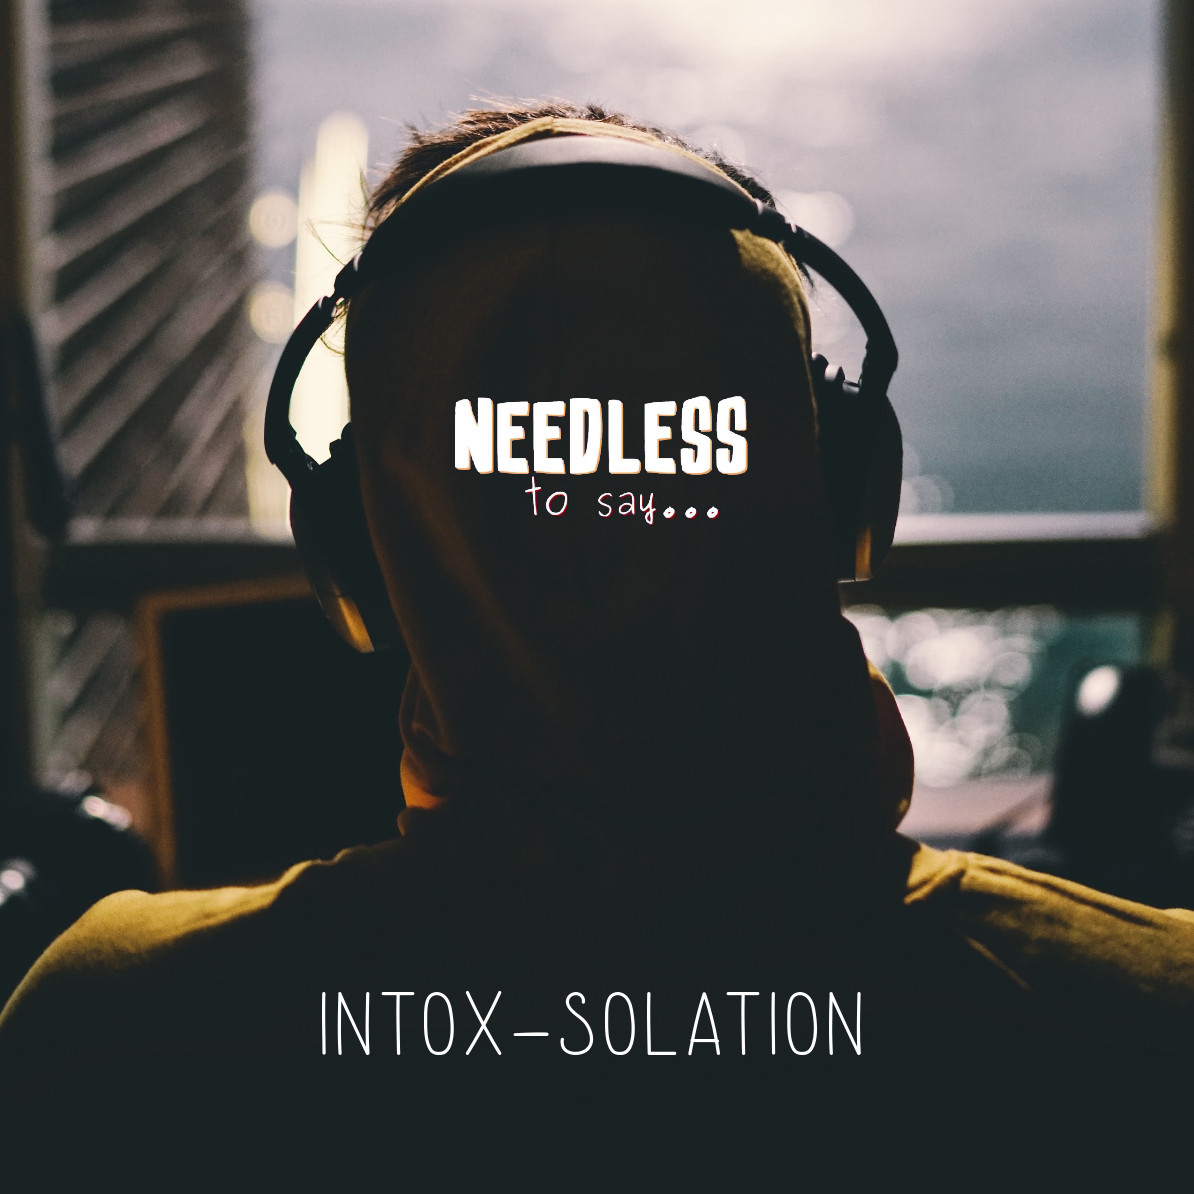 Intox-solation